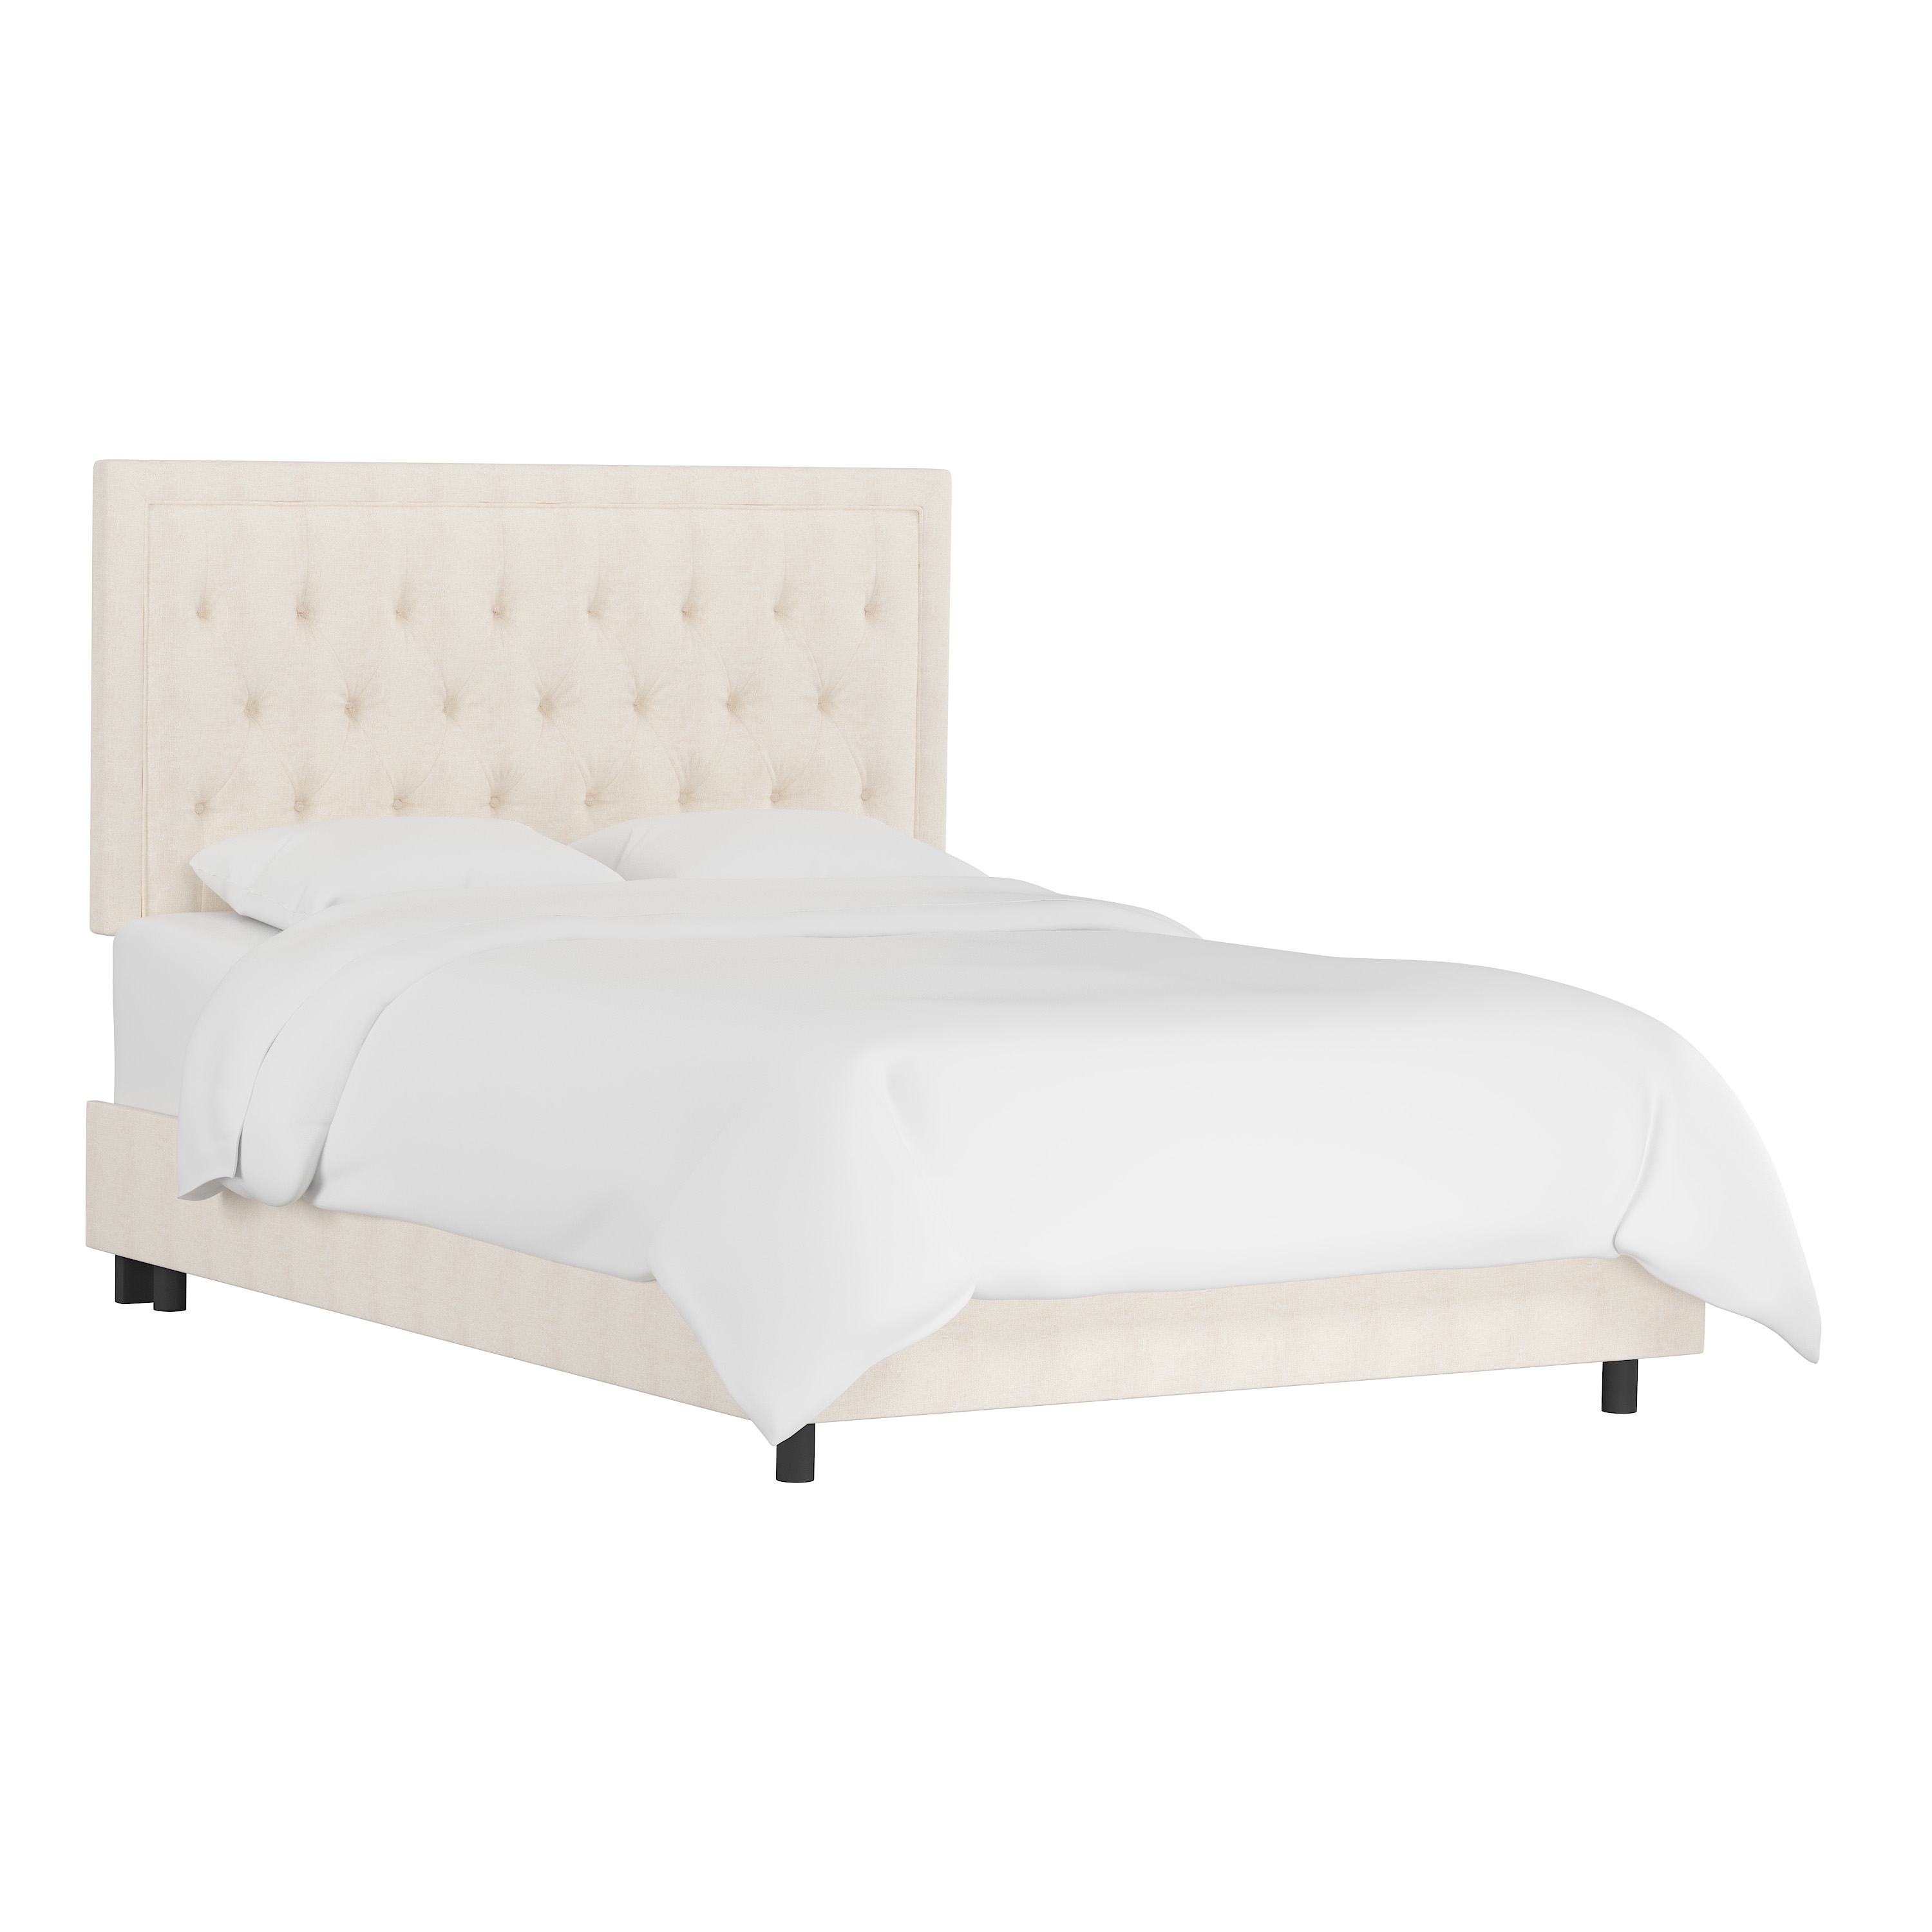 Lafayette Bed, Full, White - Image 0